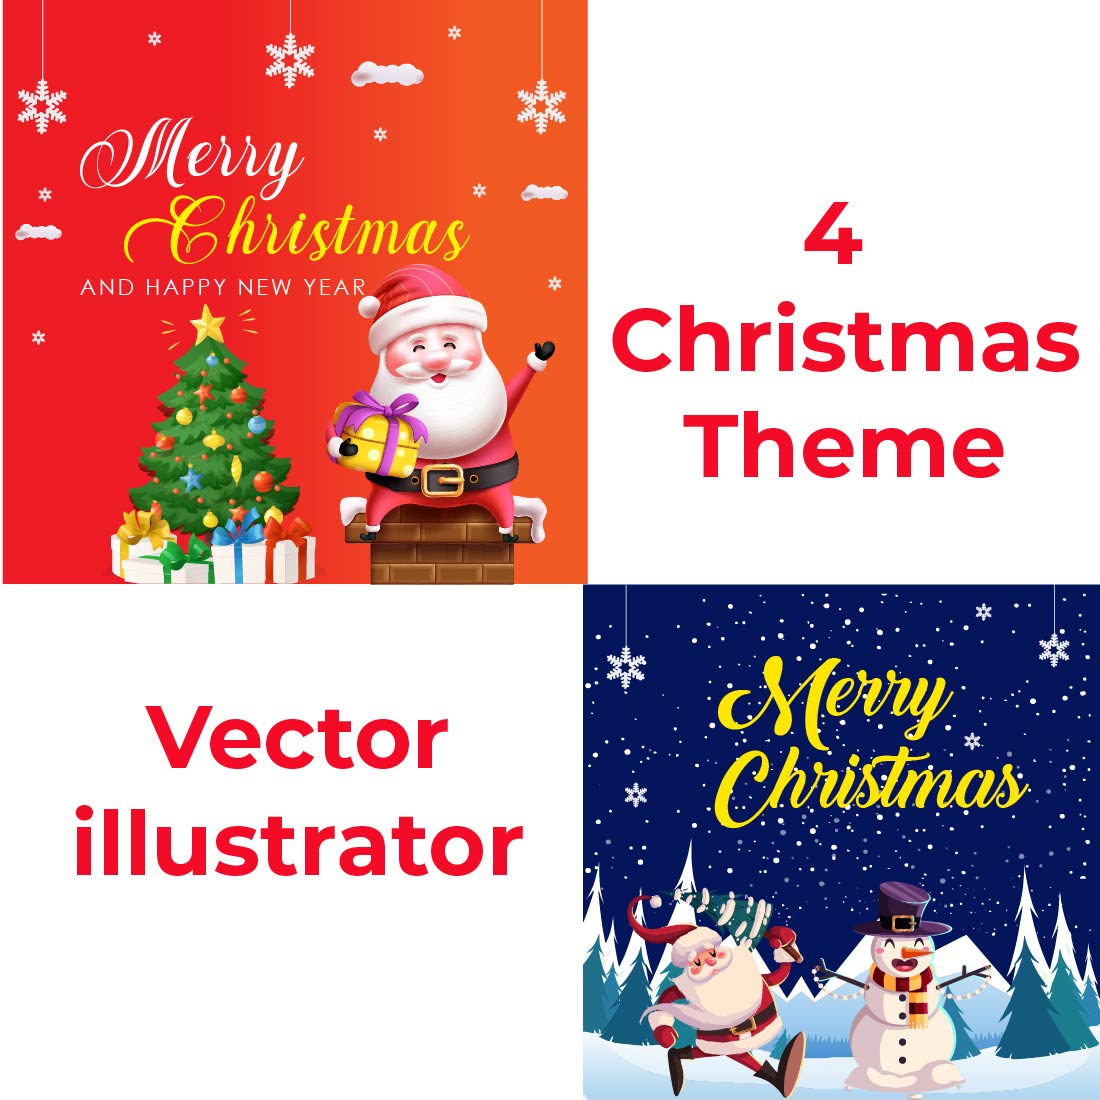 Christmas Theme Vector illustraror cover image.